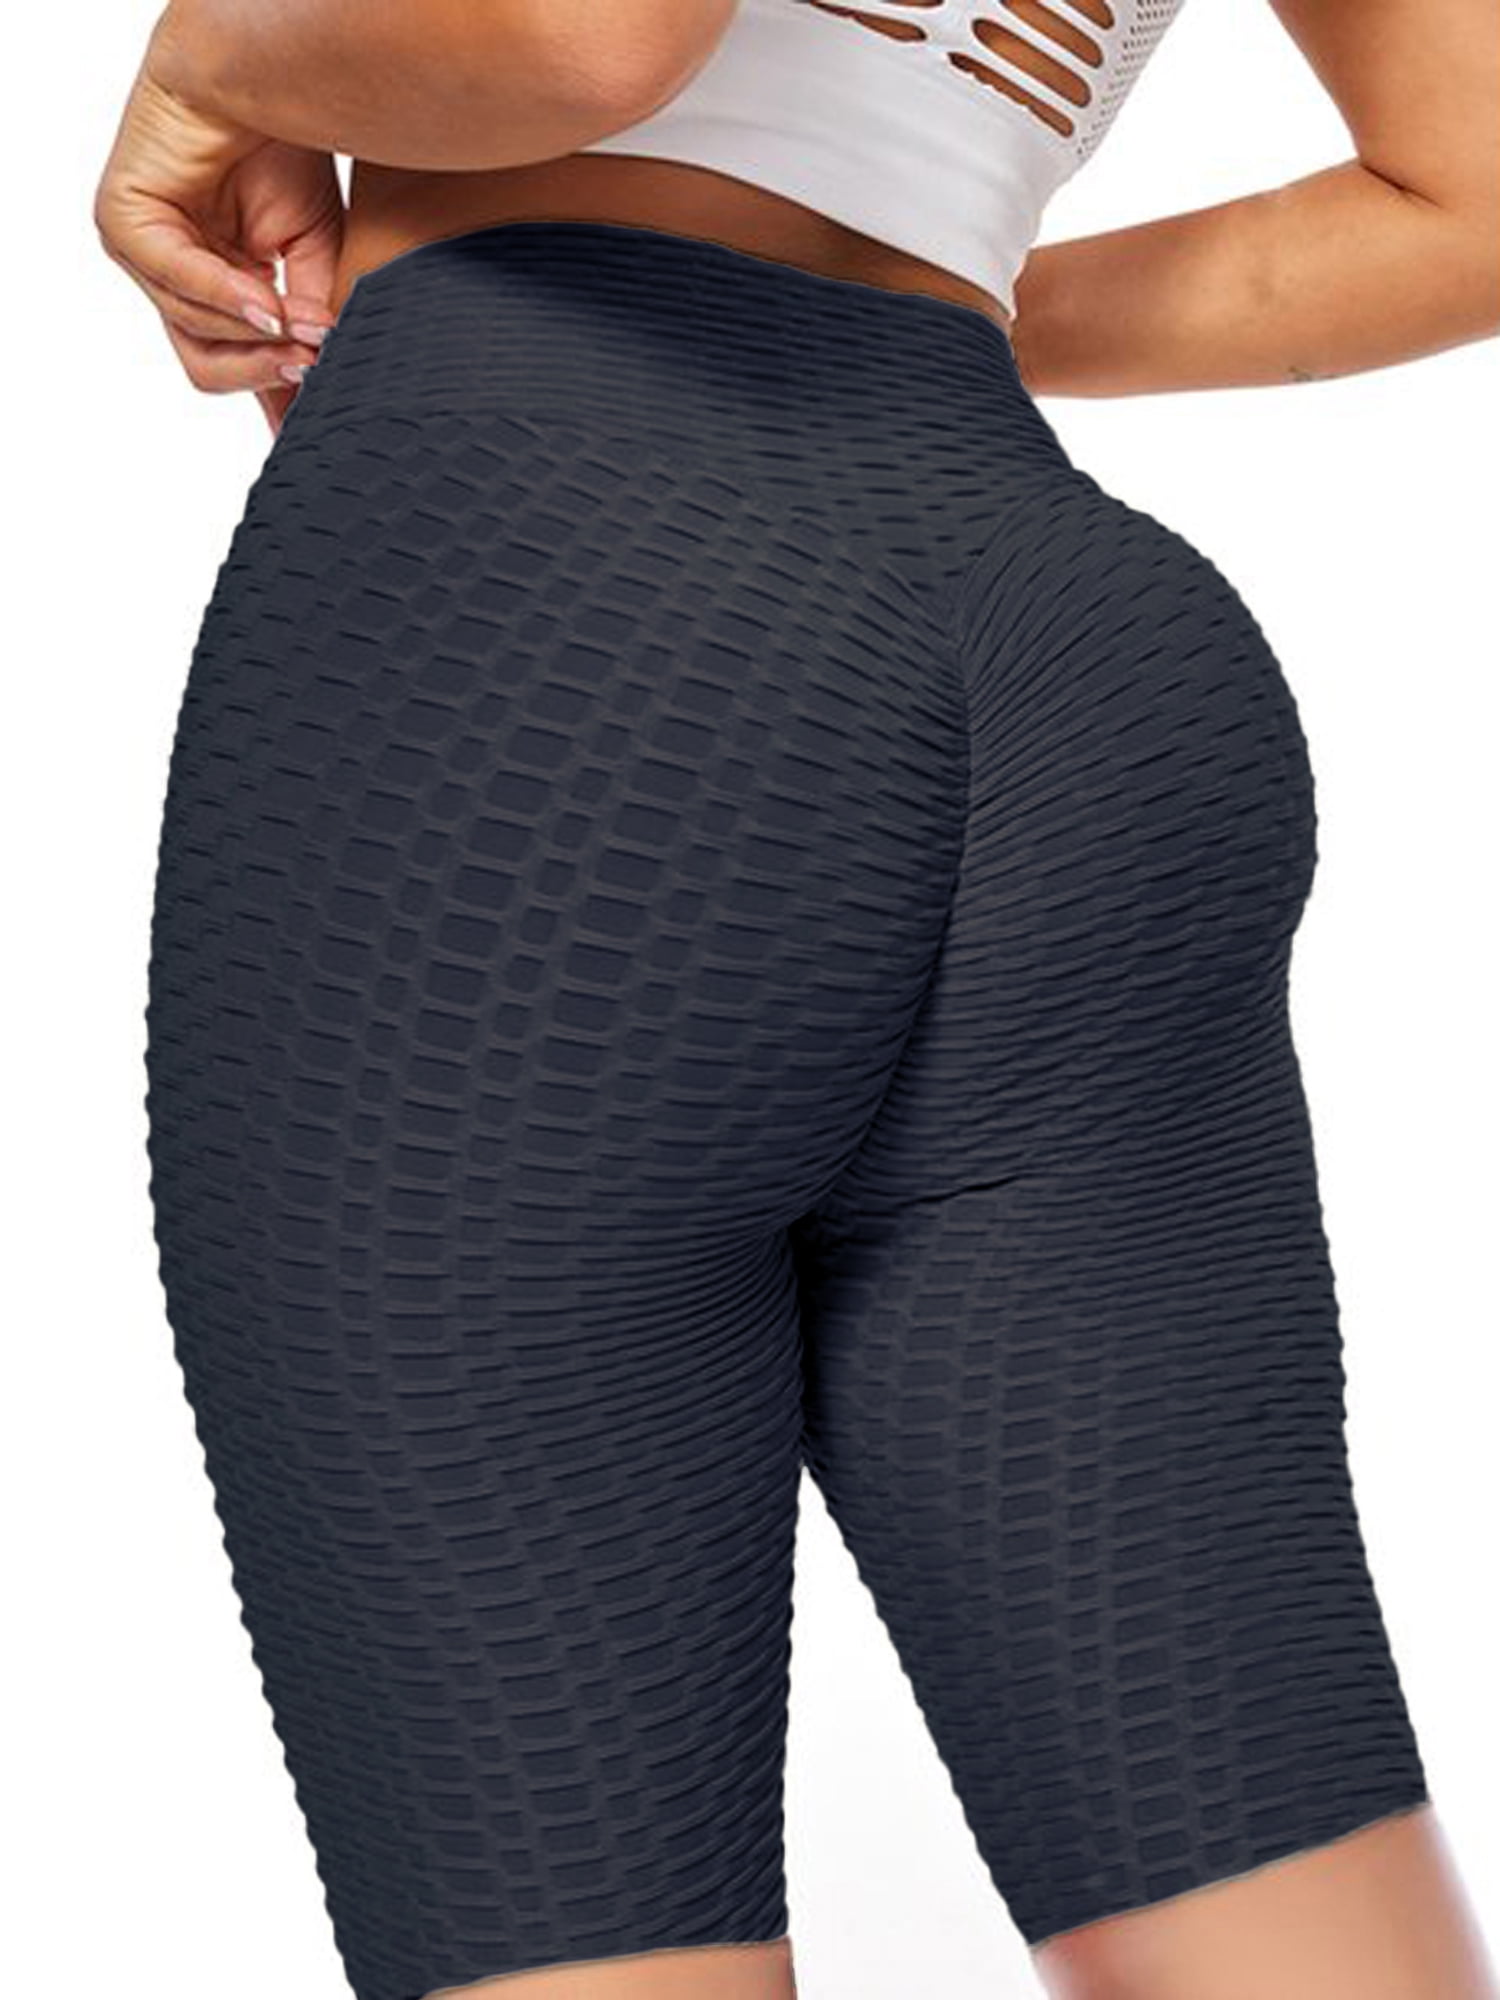 QCool Womens Cross Waist Yoga Shorts High Waist Biker Shorts Tummy Control Compression Shorts Workout Scrunch Leggings 